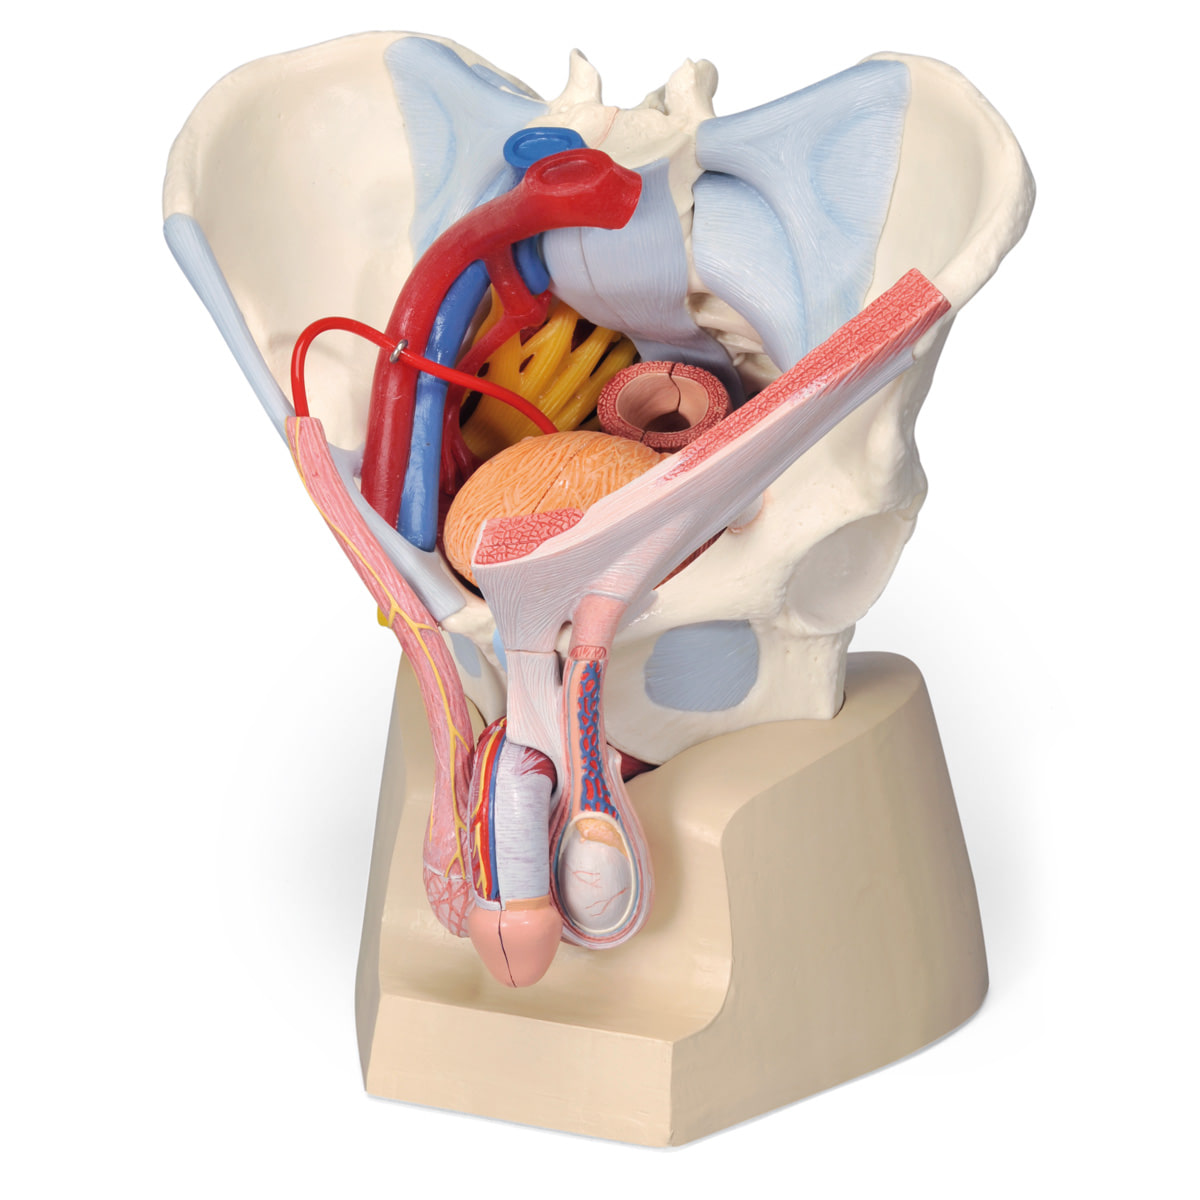 [3B] H21/3 7분리 남성골반모형(인대,혈관,신경,골반기저부) / Male pelvis with ligaments, vessels, nerves, pelvic floor and organs, 7-parts